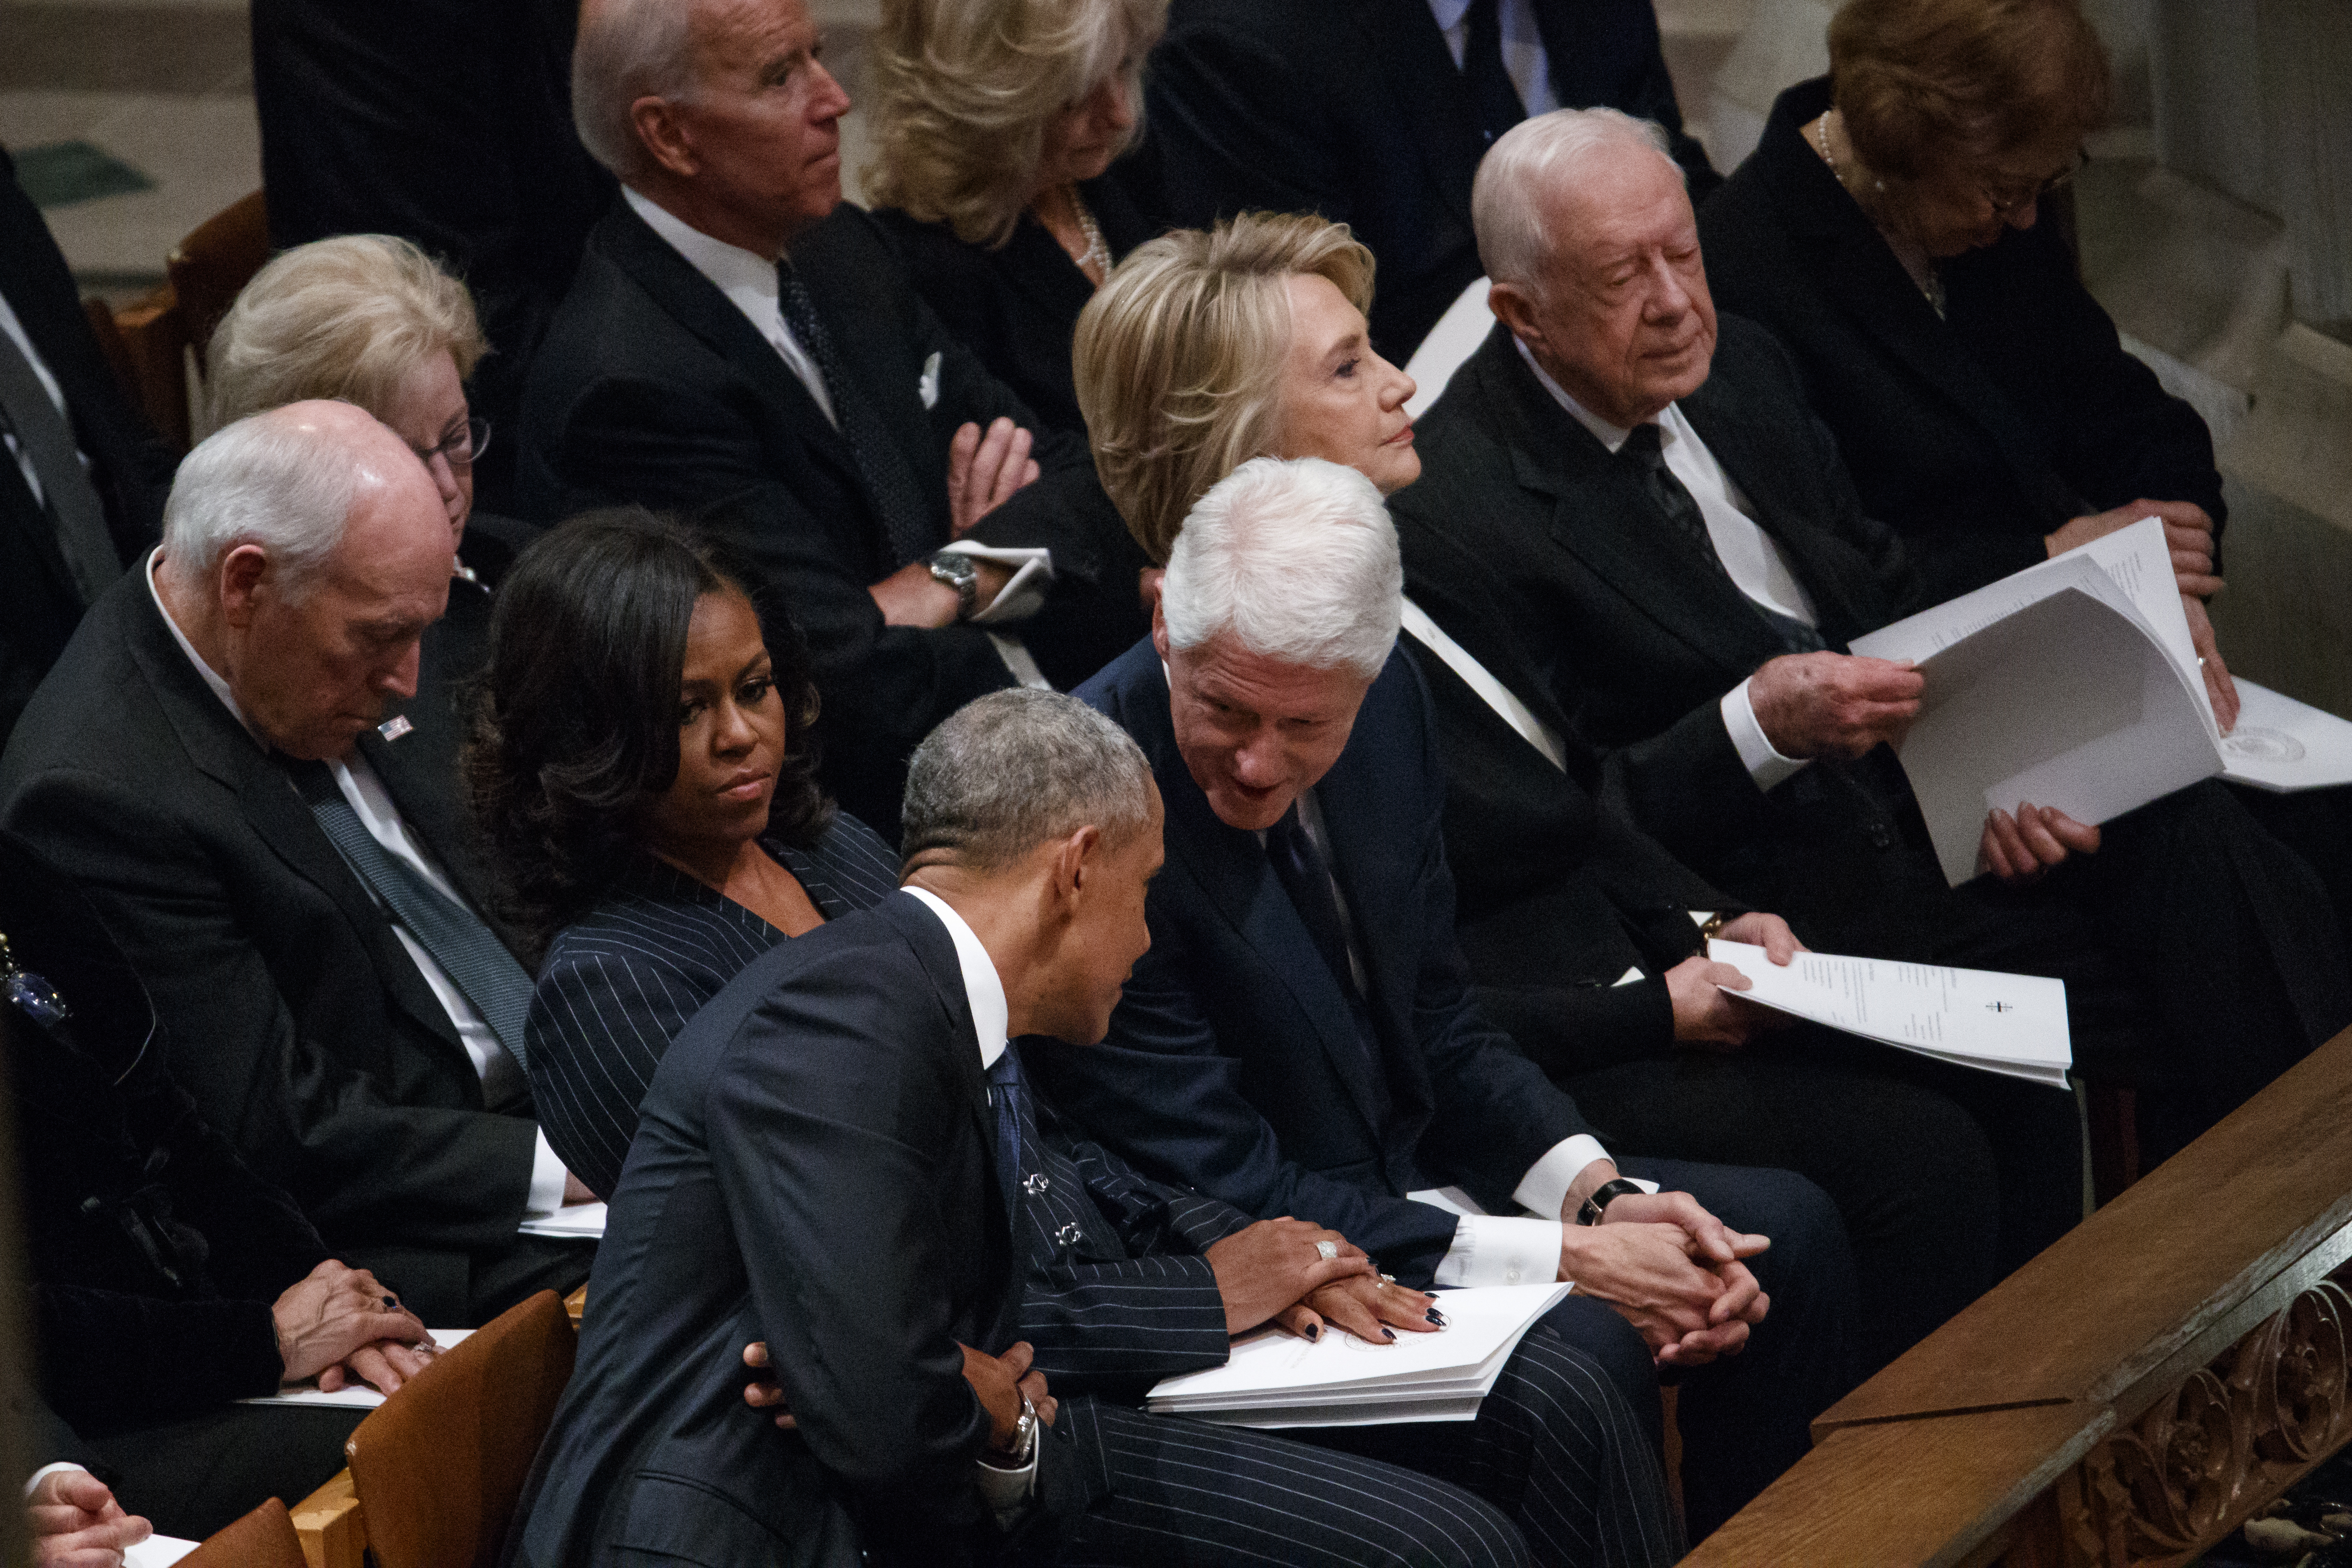 Former President Bill Clinton talks with former President Barack Obama before a State Funeral for former president George HW Bush